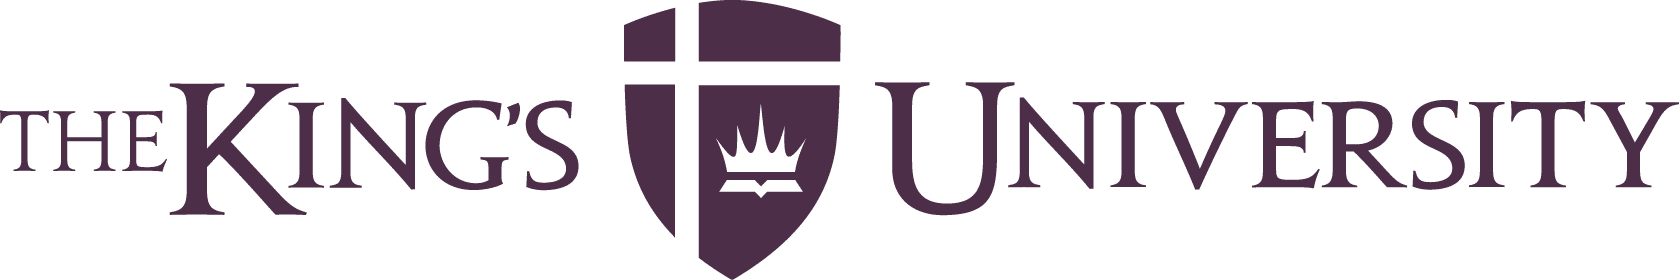 The King's University - Tuition, Rankings, Majors, Alumni, & Acceptance ...